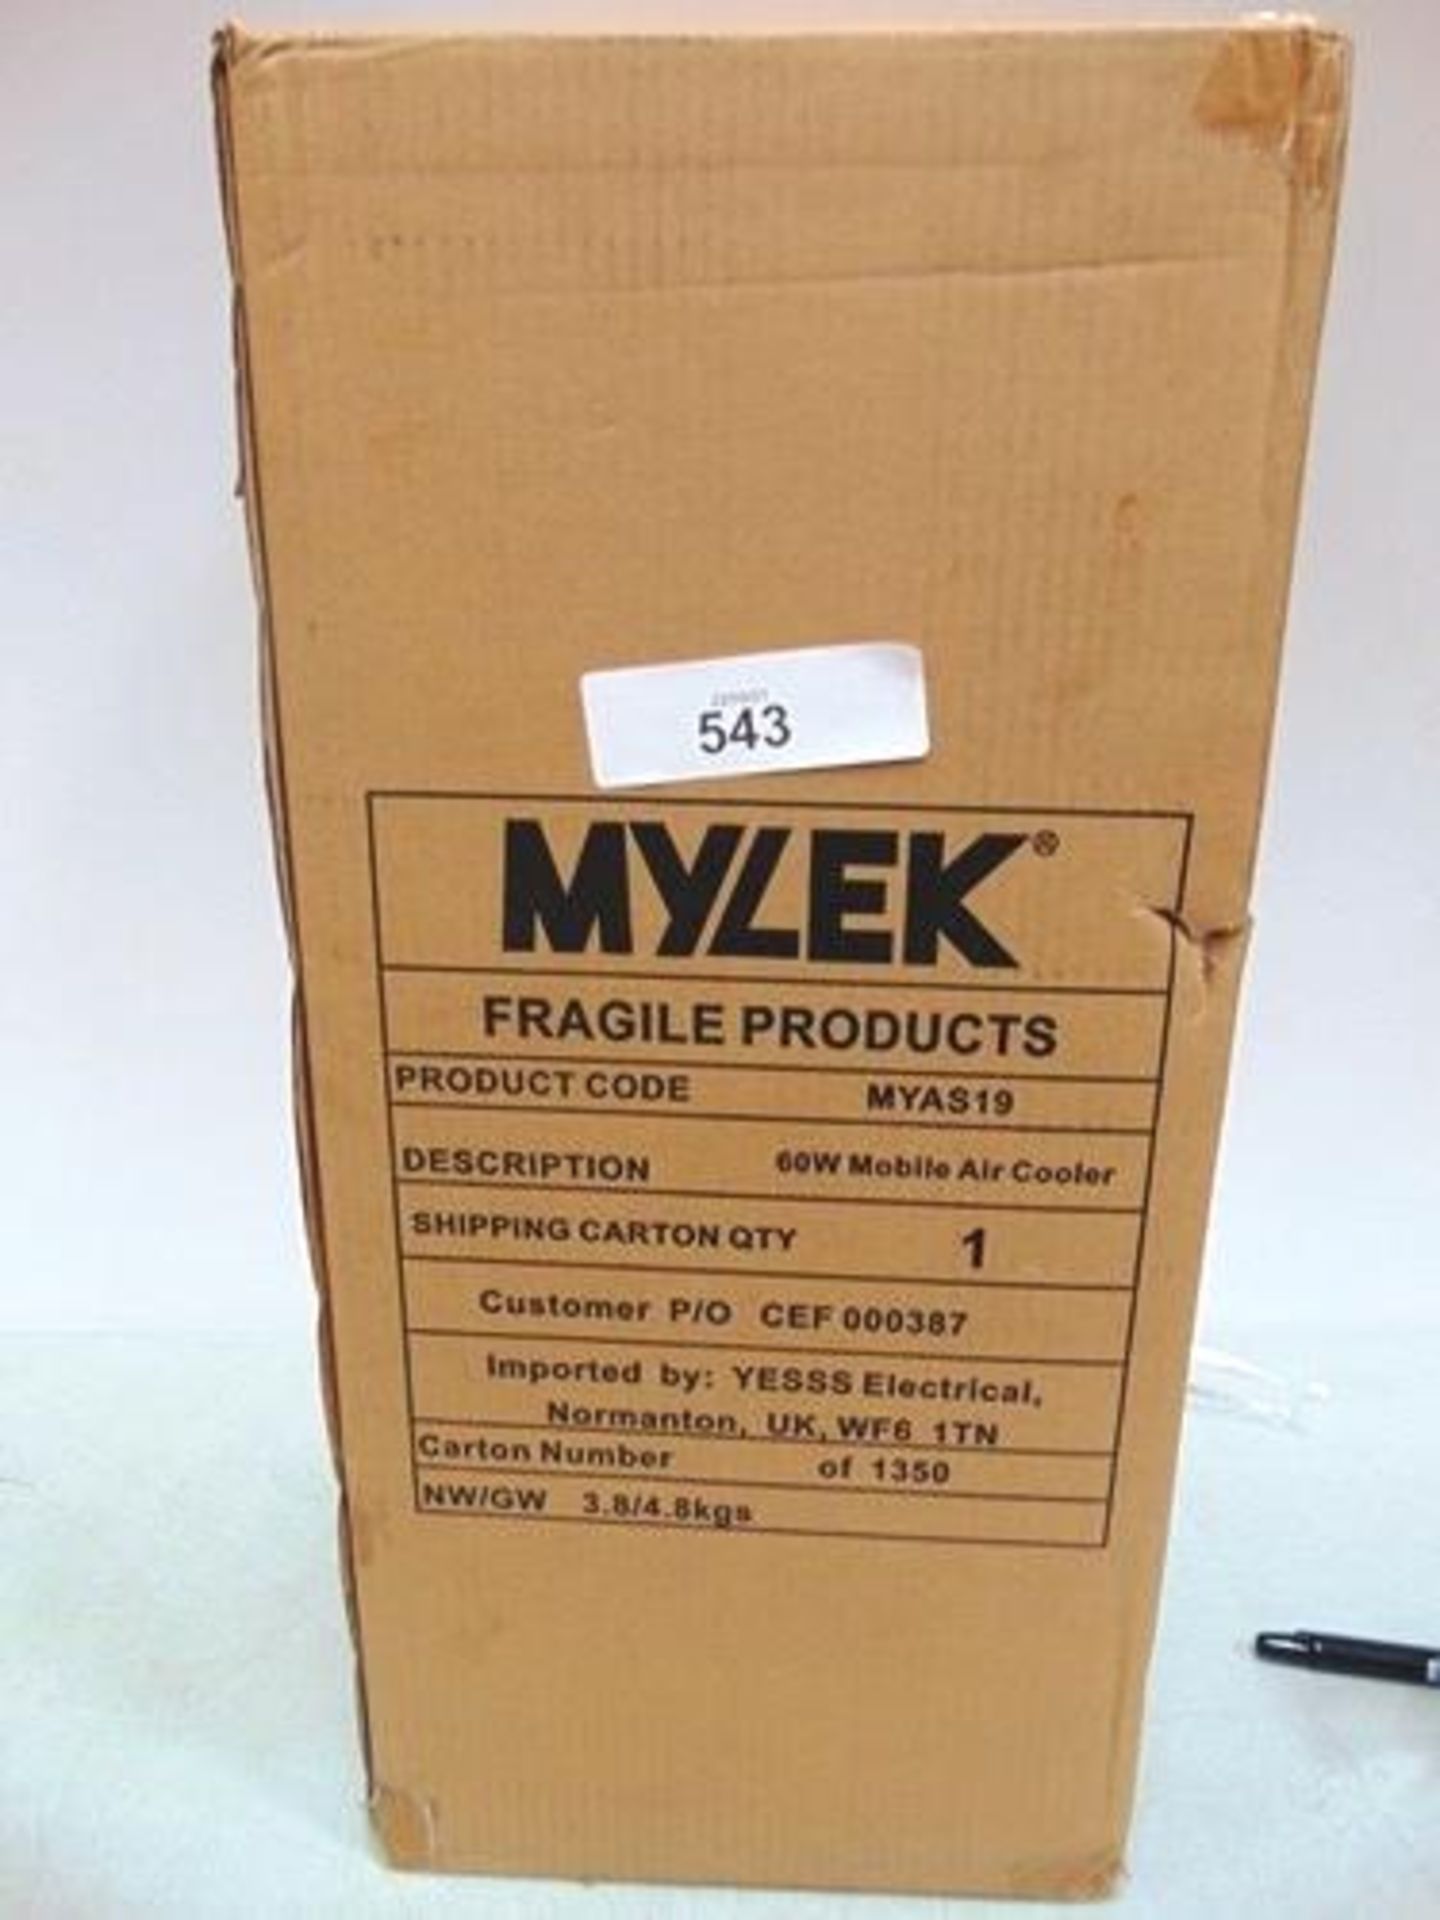 1 x Mylek 60W mobile air cooler, model MYAS19 - Sealed new in box (ES7)